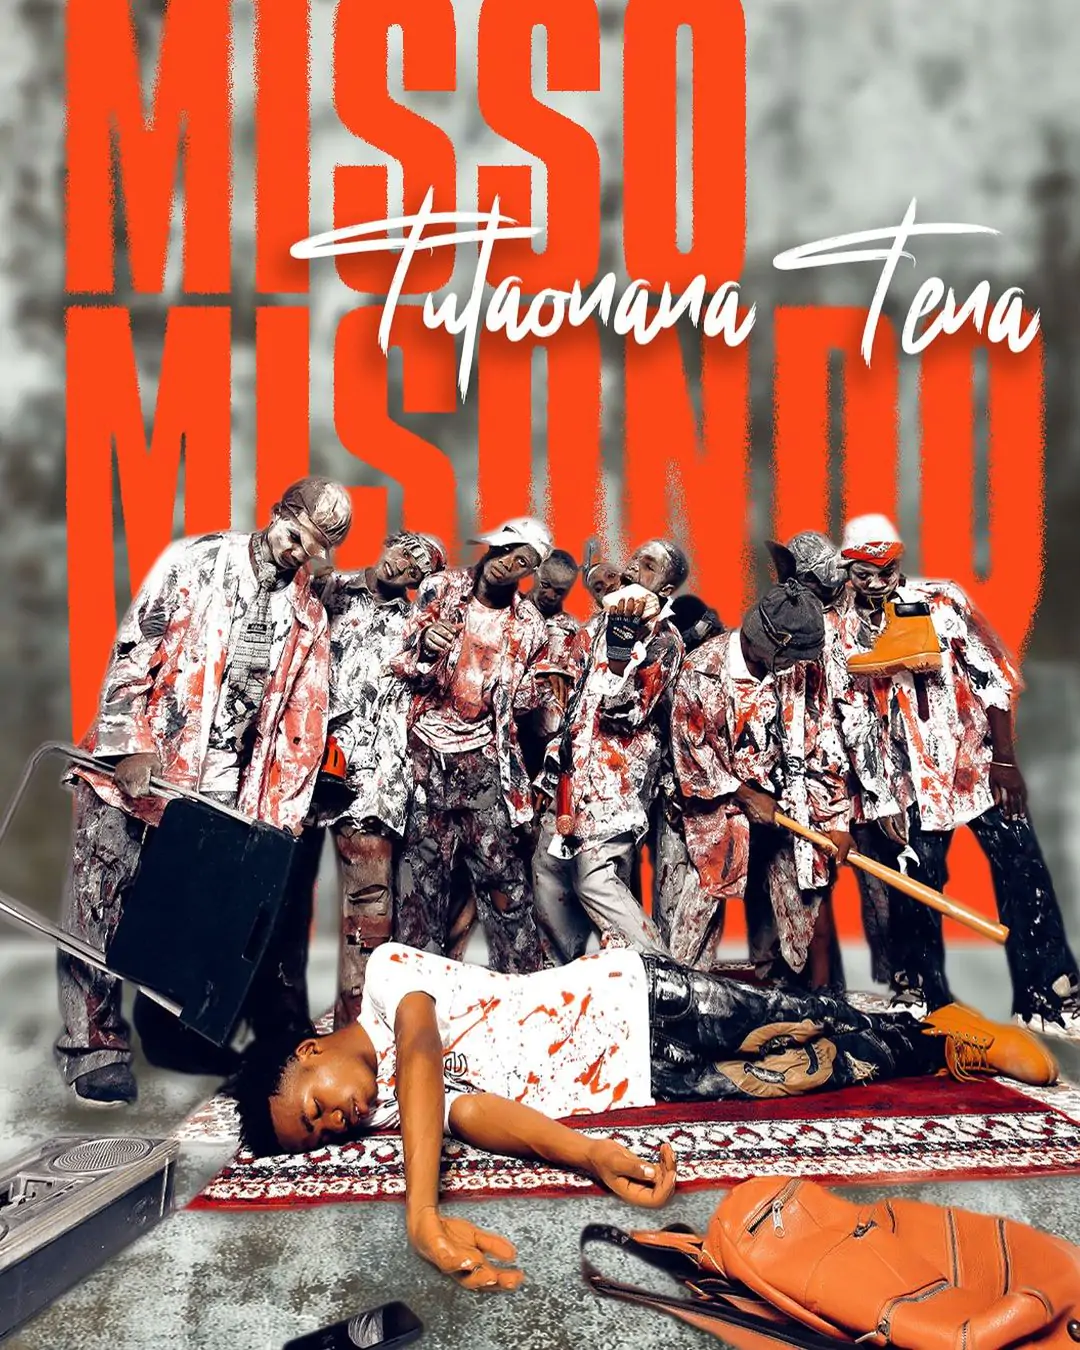 Download Audio Mp3 | Misso Misondo – Tutaonana Tena